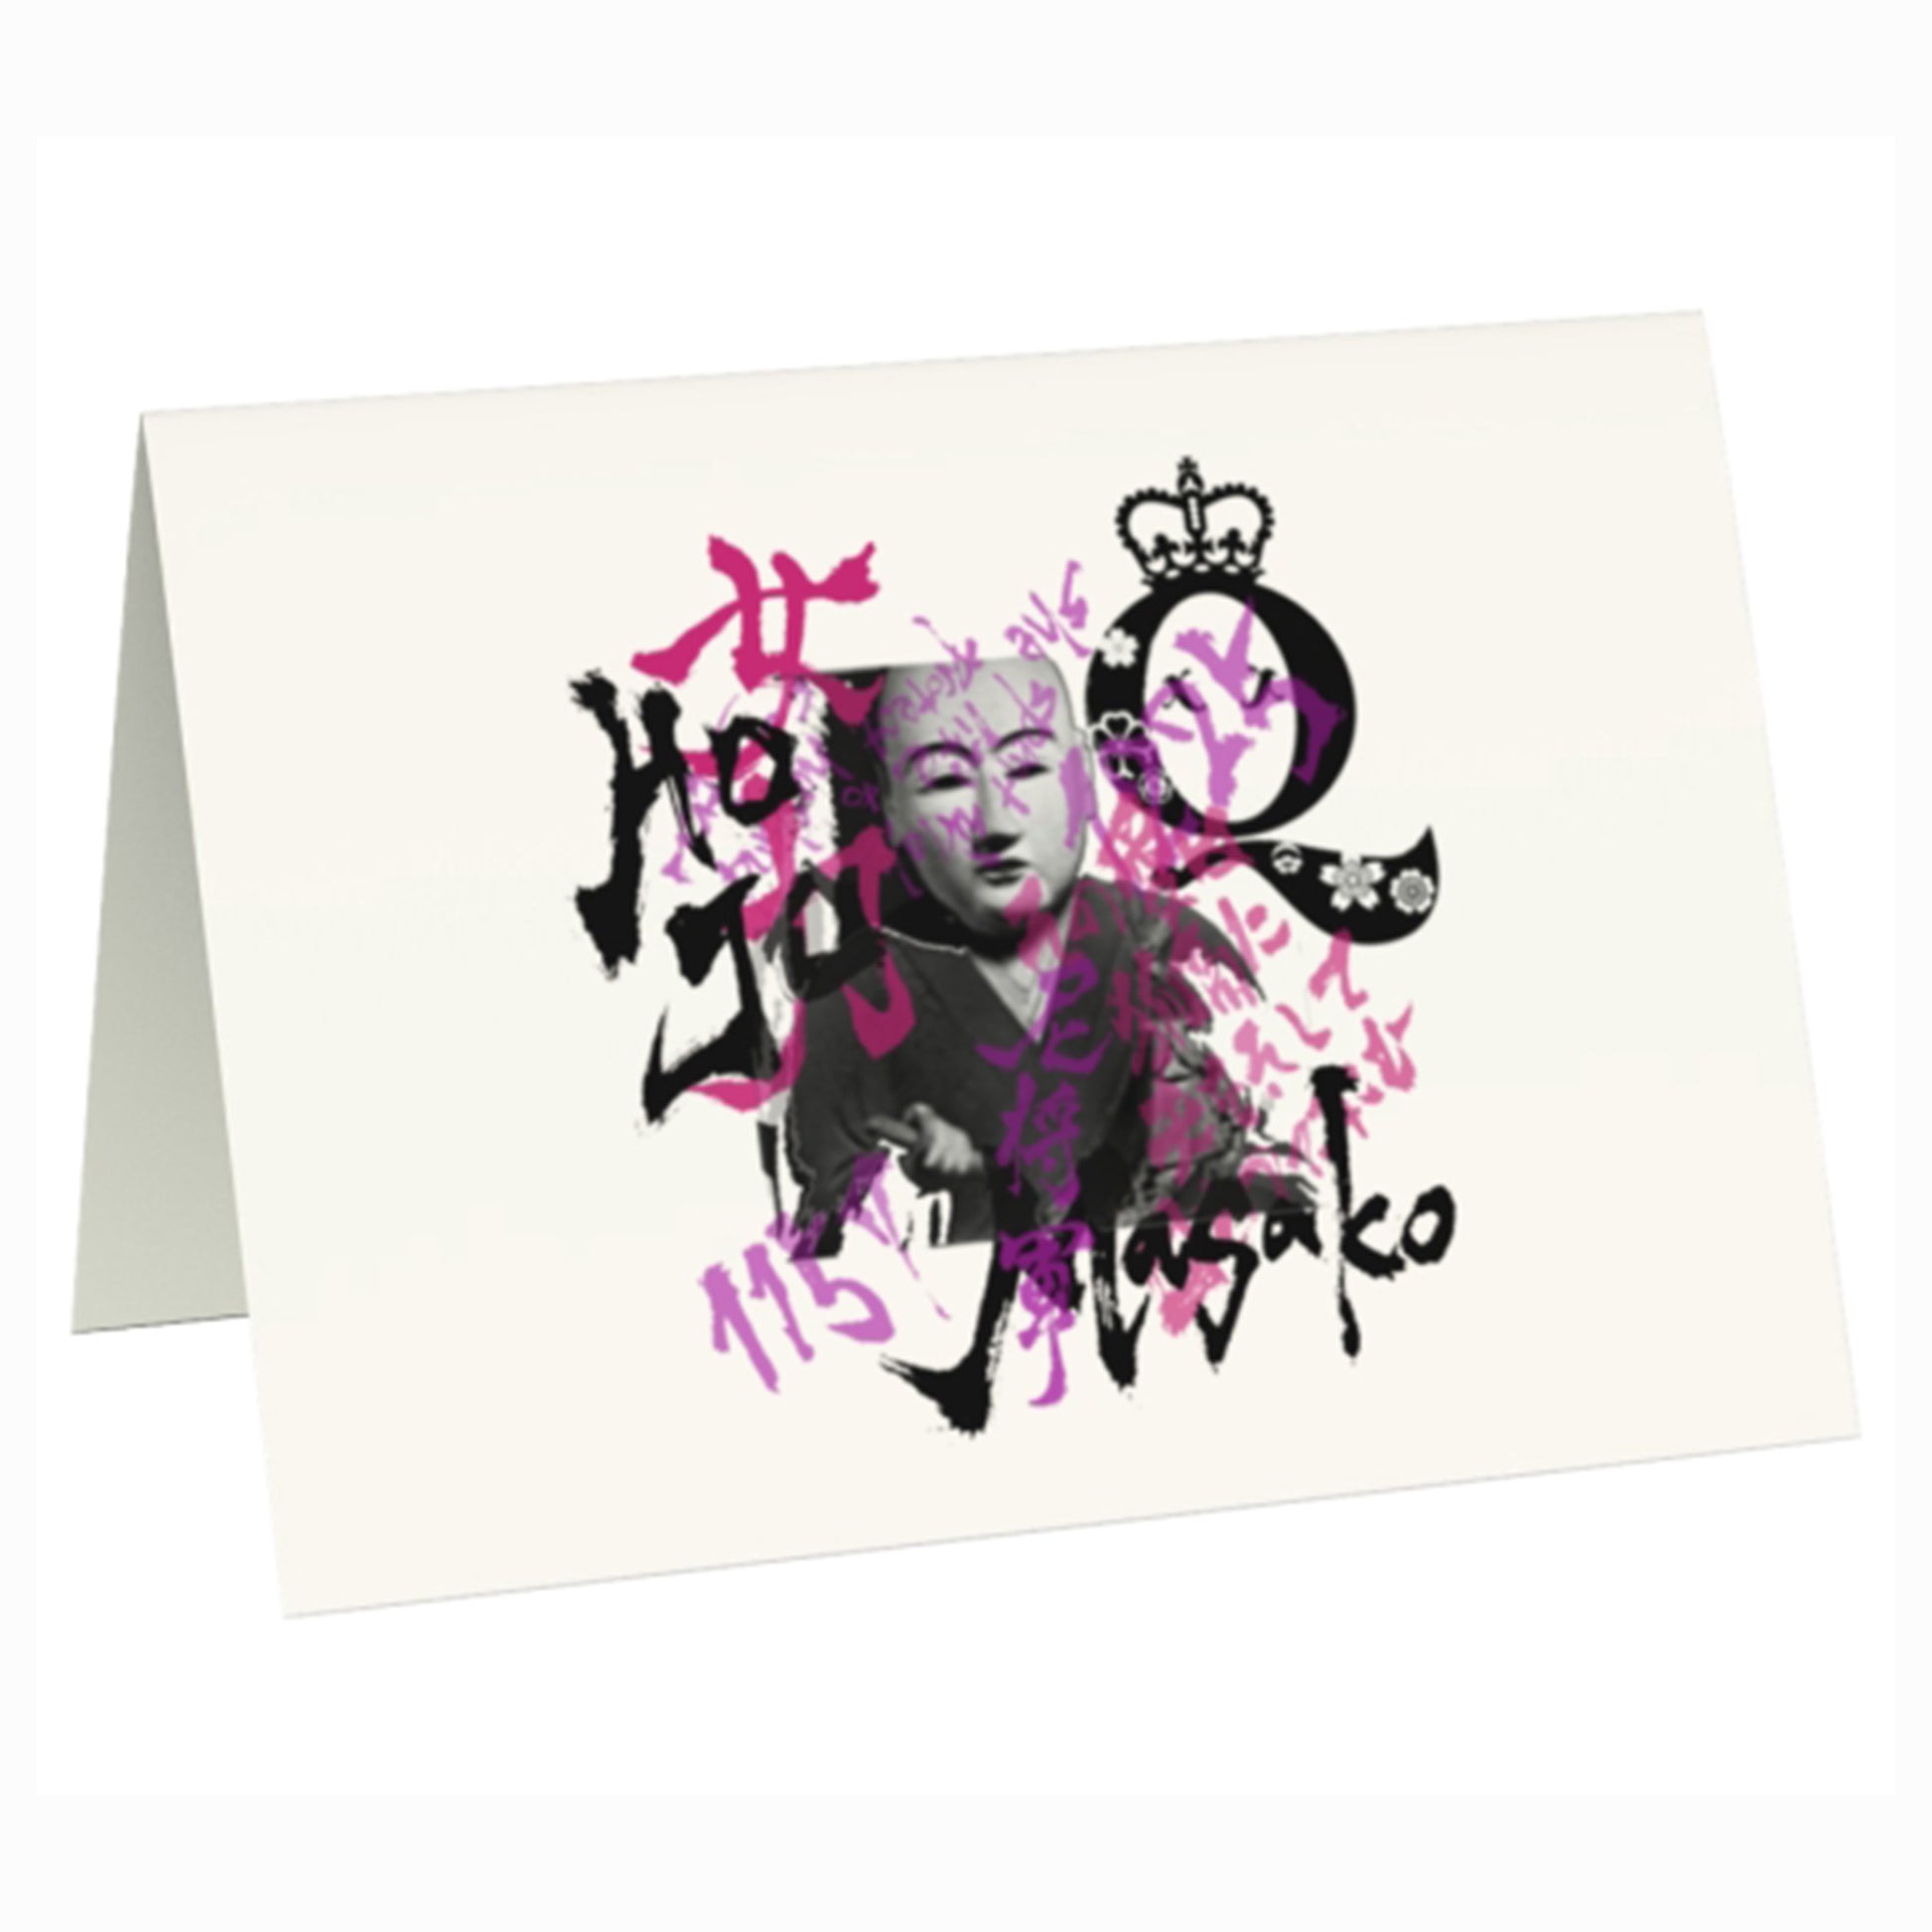 Hojo Masako Art Greeting Card